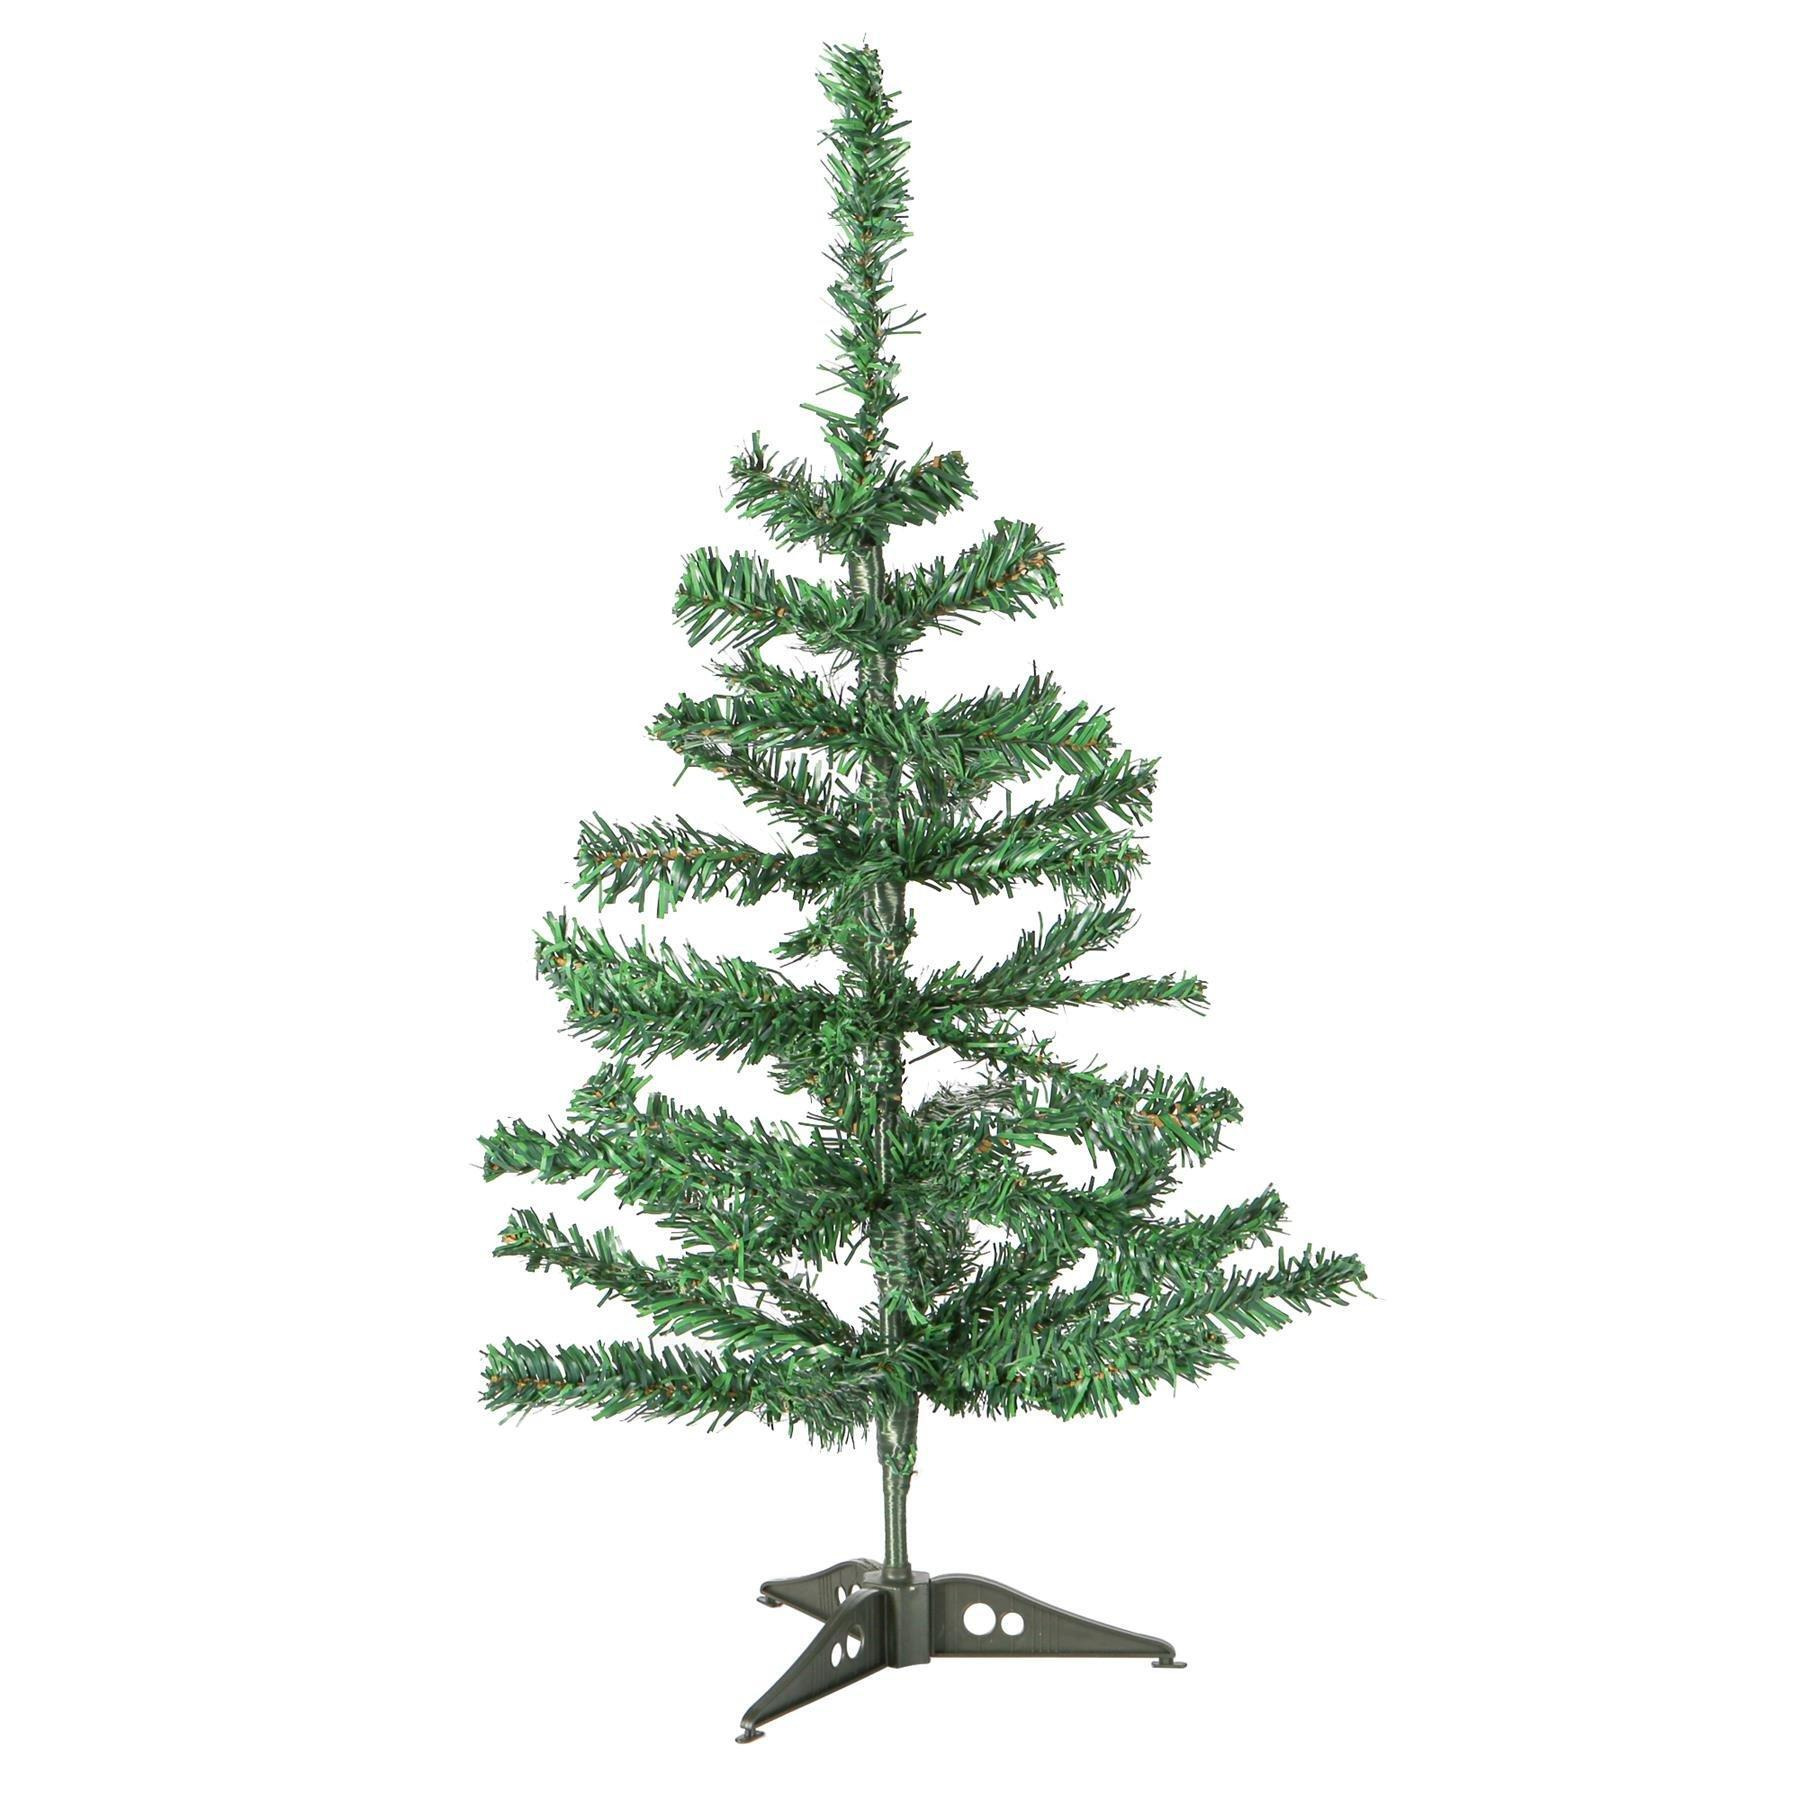 Artificial Fir Christmas Tree 60cm - image 1